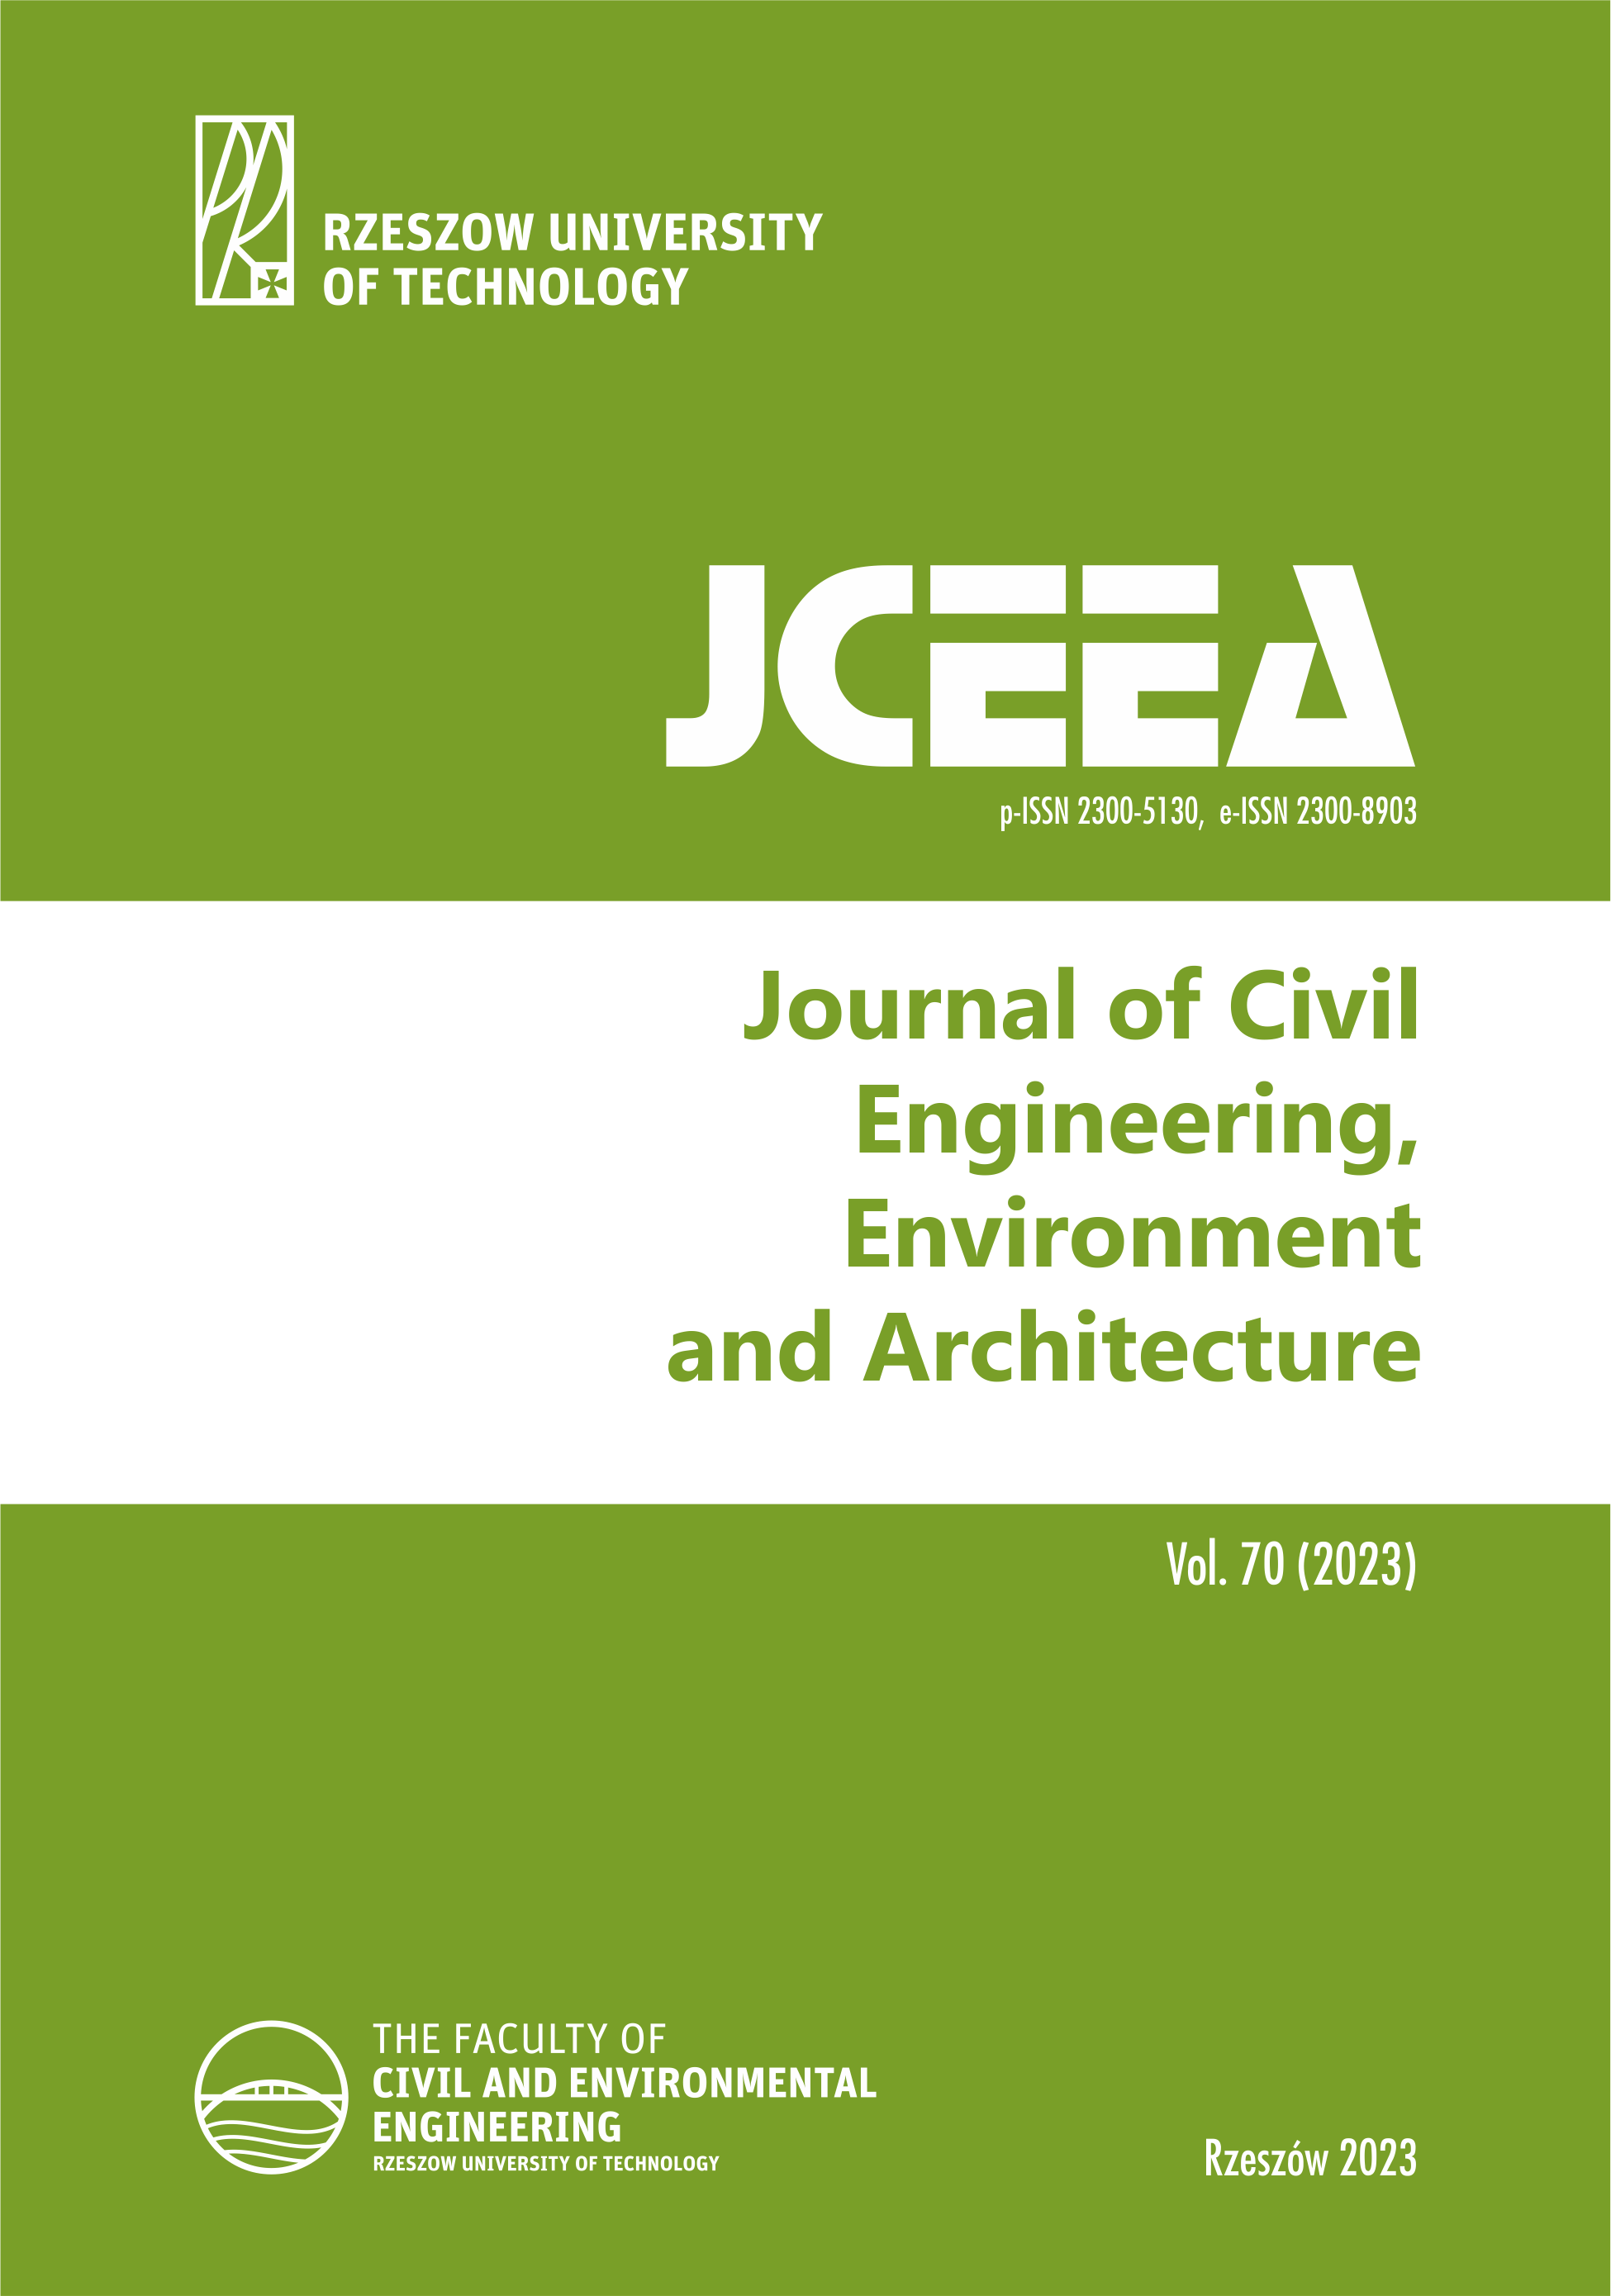 JCEEA 70 (2023) Cover page